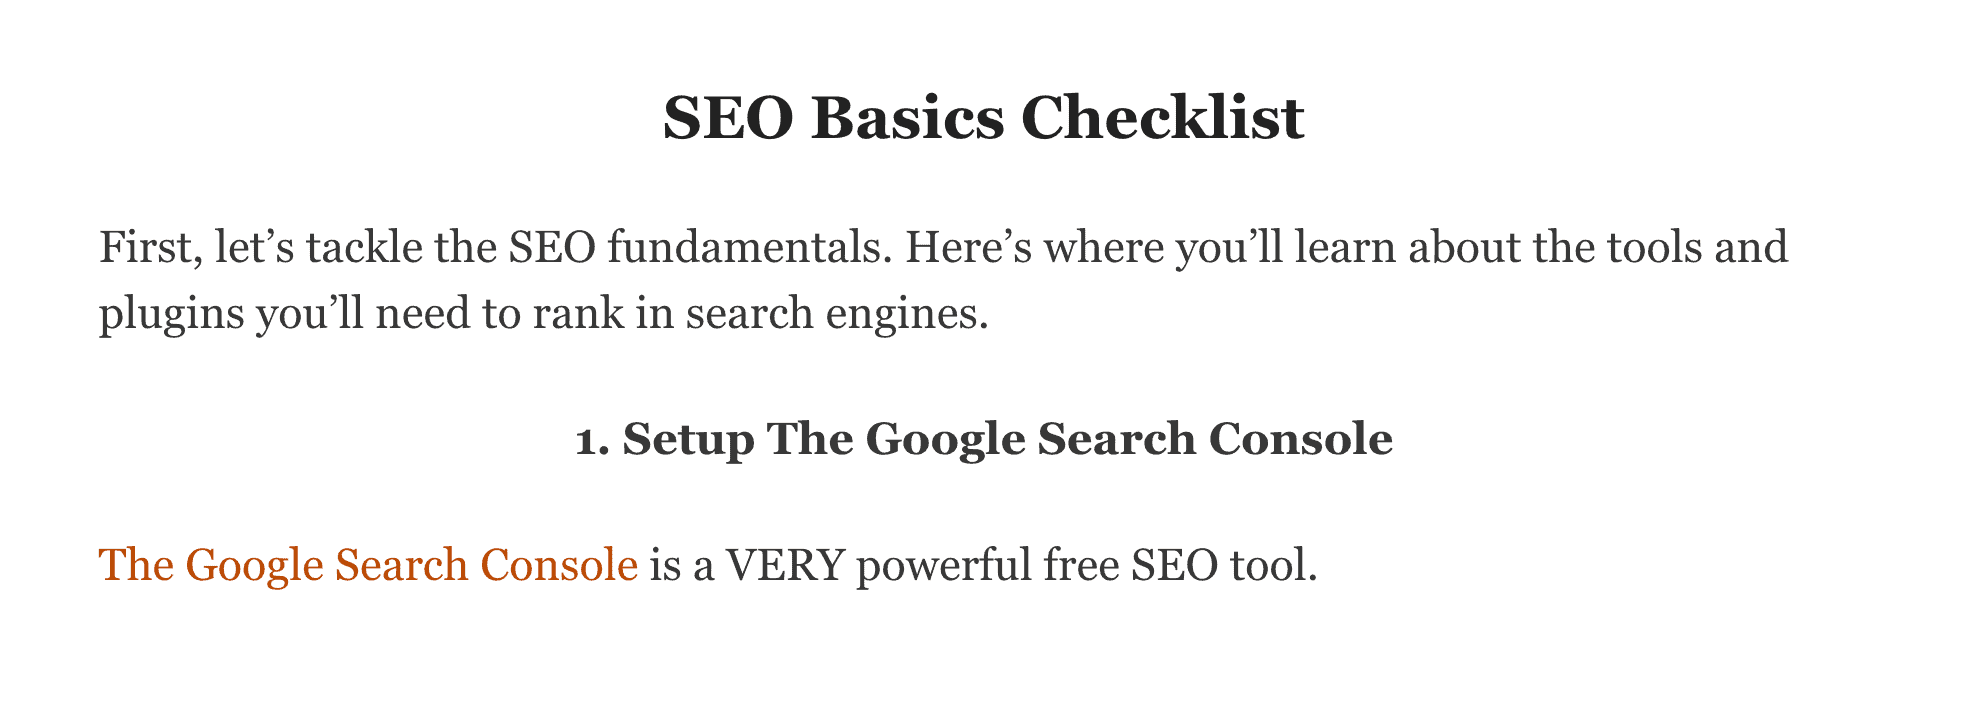 SEO checklist – New first step